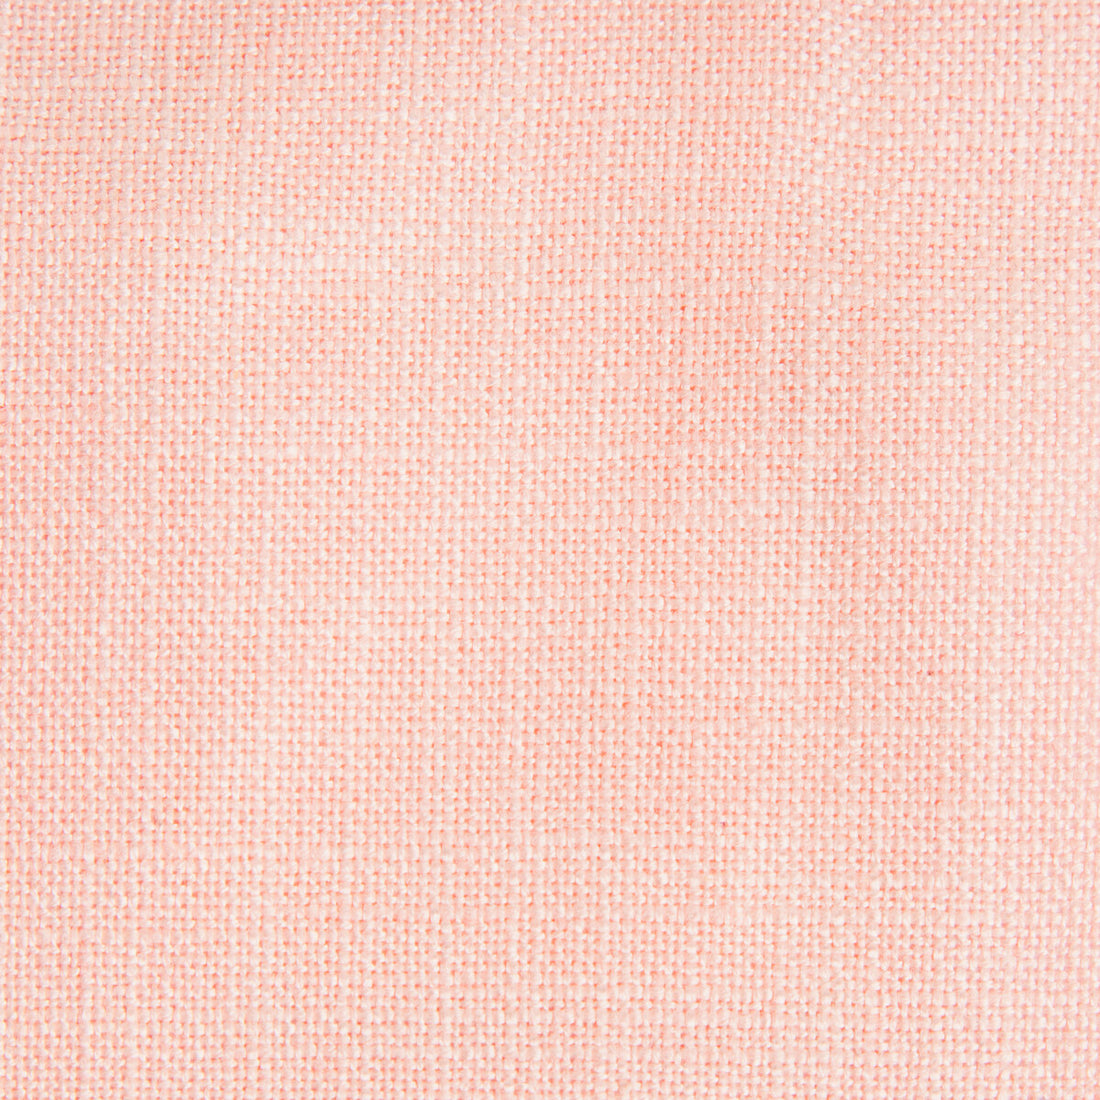 Peru fabric in rosa color - pattern GDT5548.026.0 - by Gaston y Daniela in the Gaston Nuevo Mundo collection